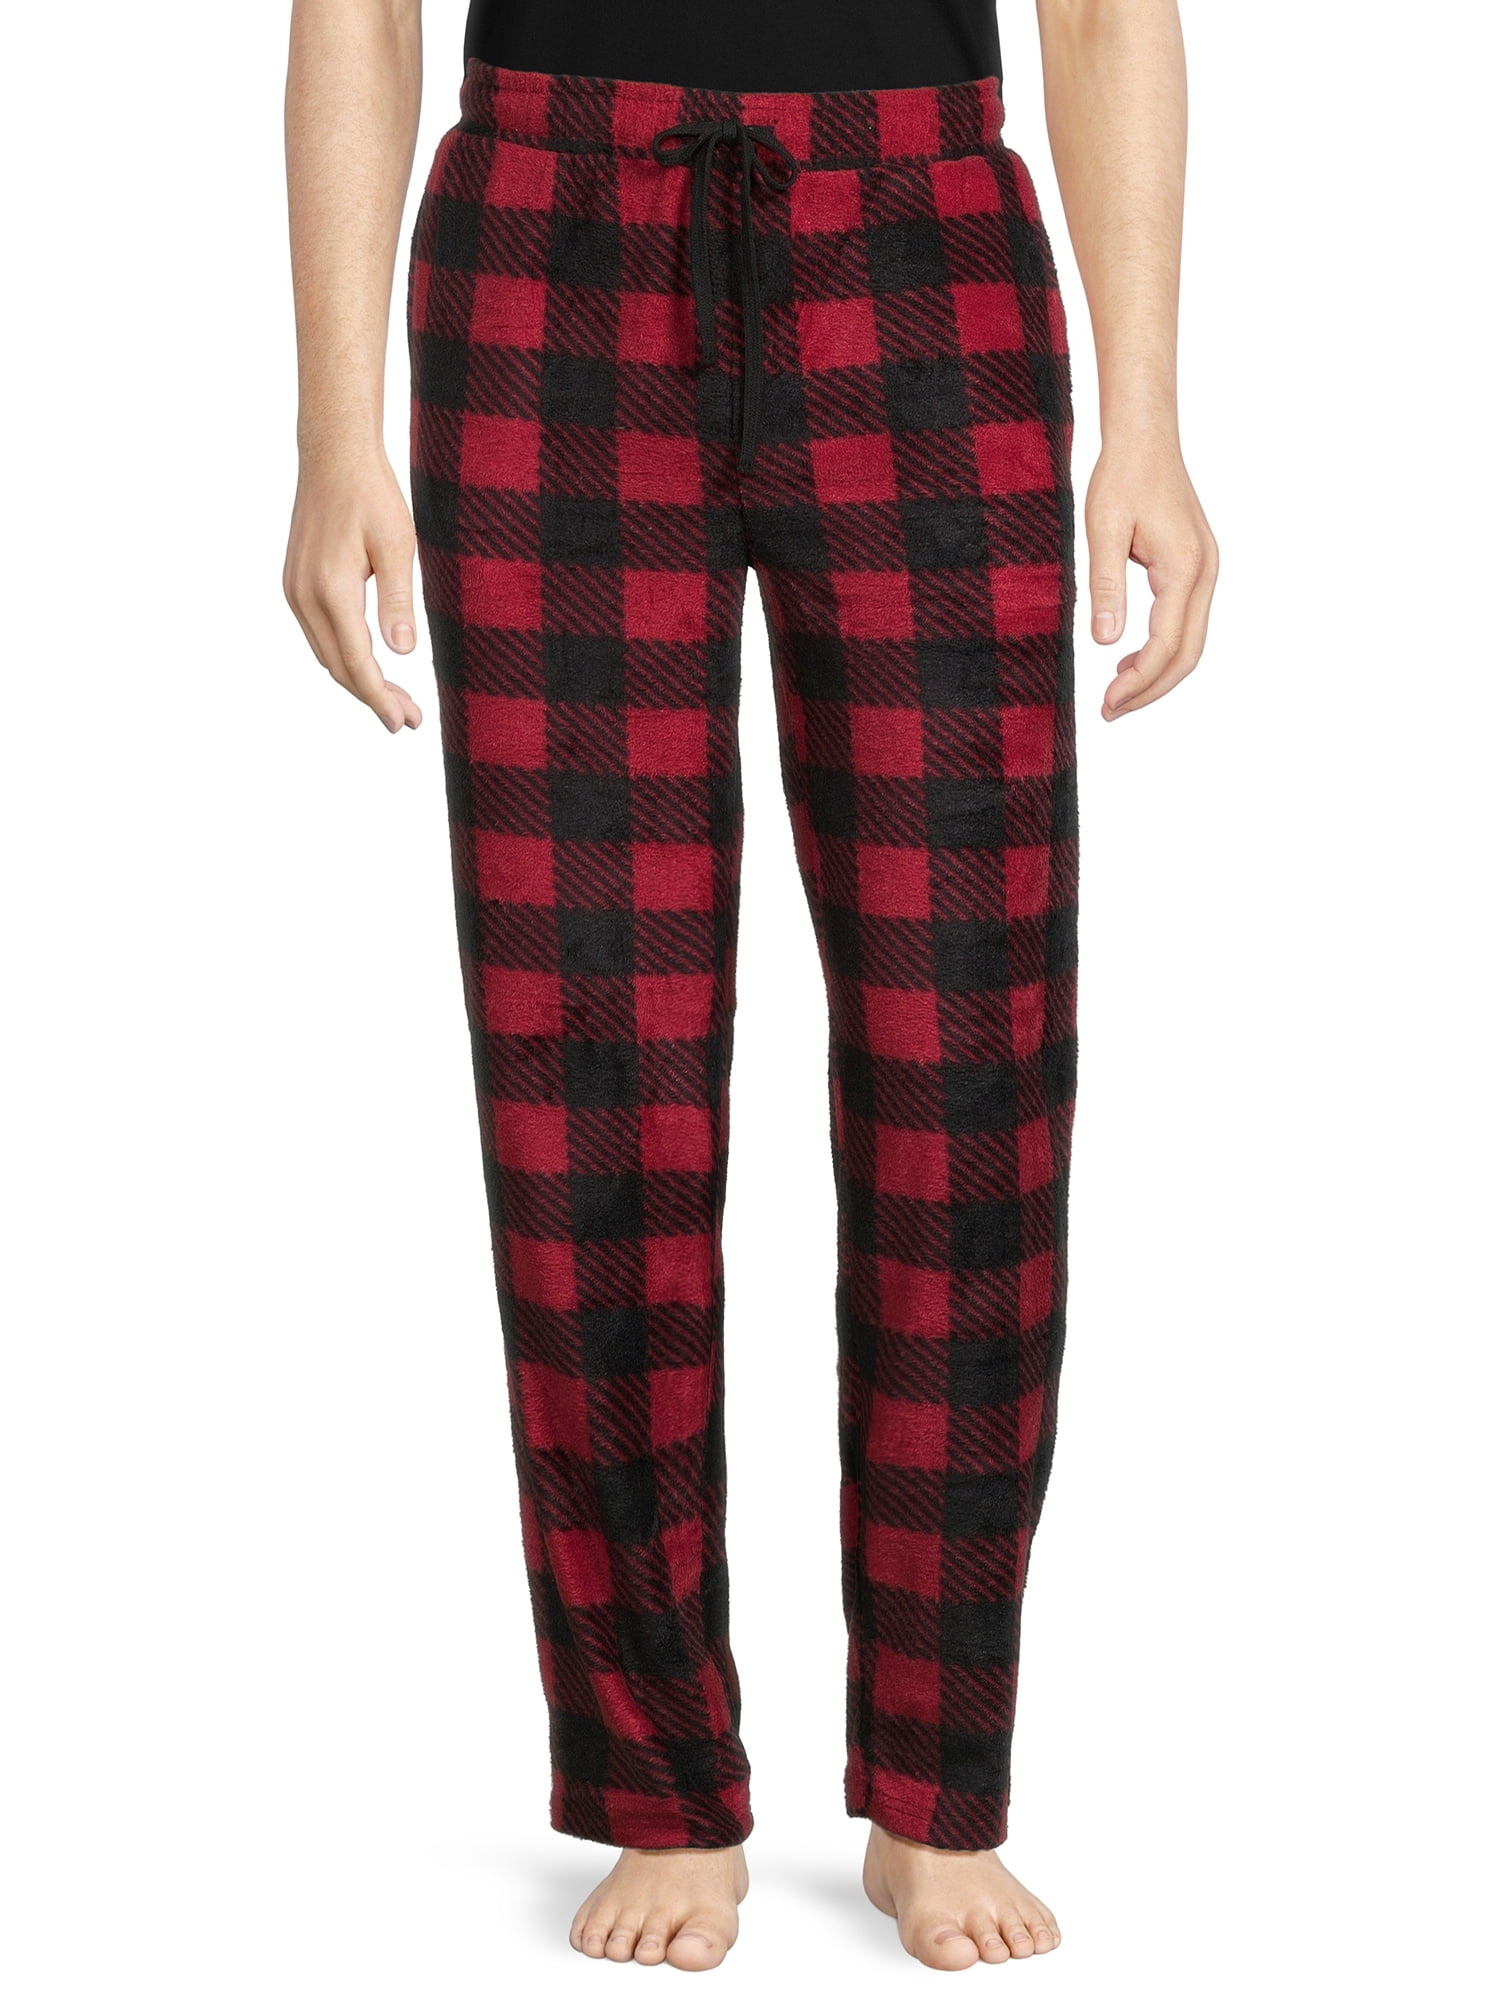 George Men's Sleep Pants, Sizes S-2XL - Walmart.com